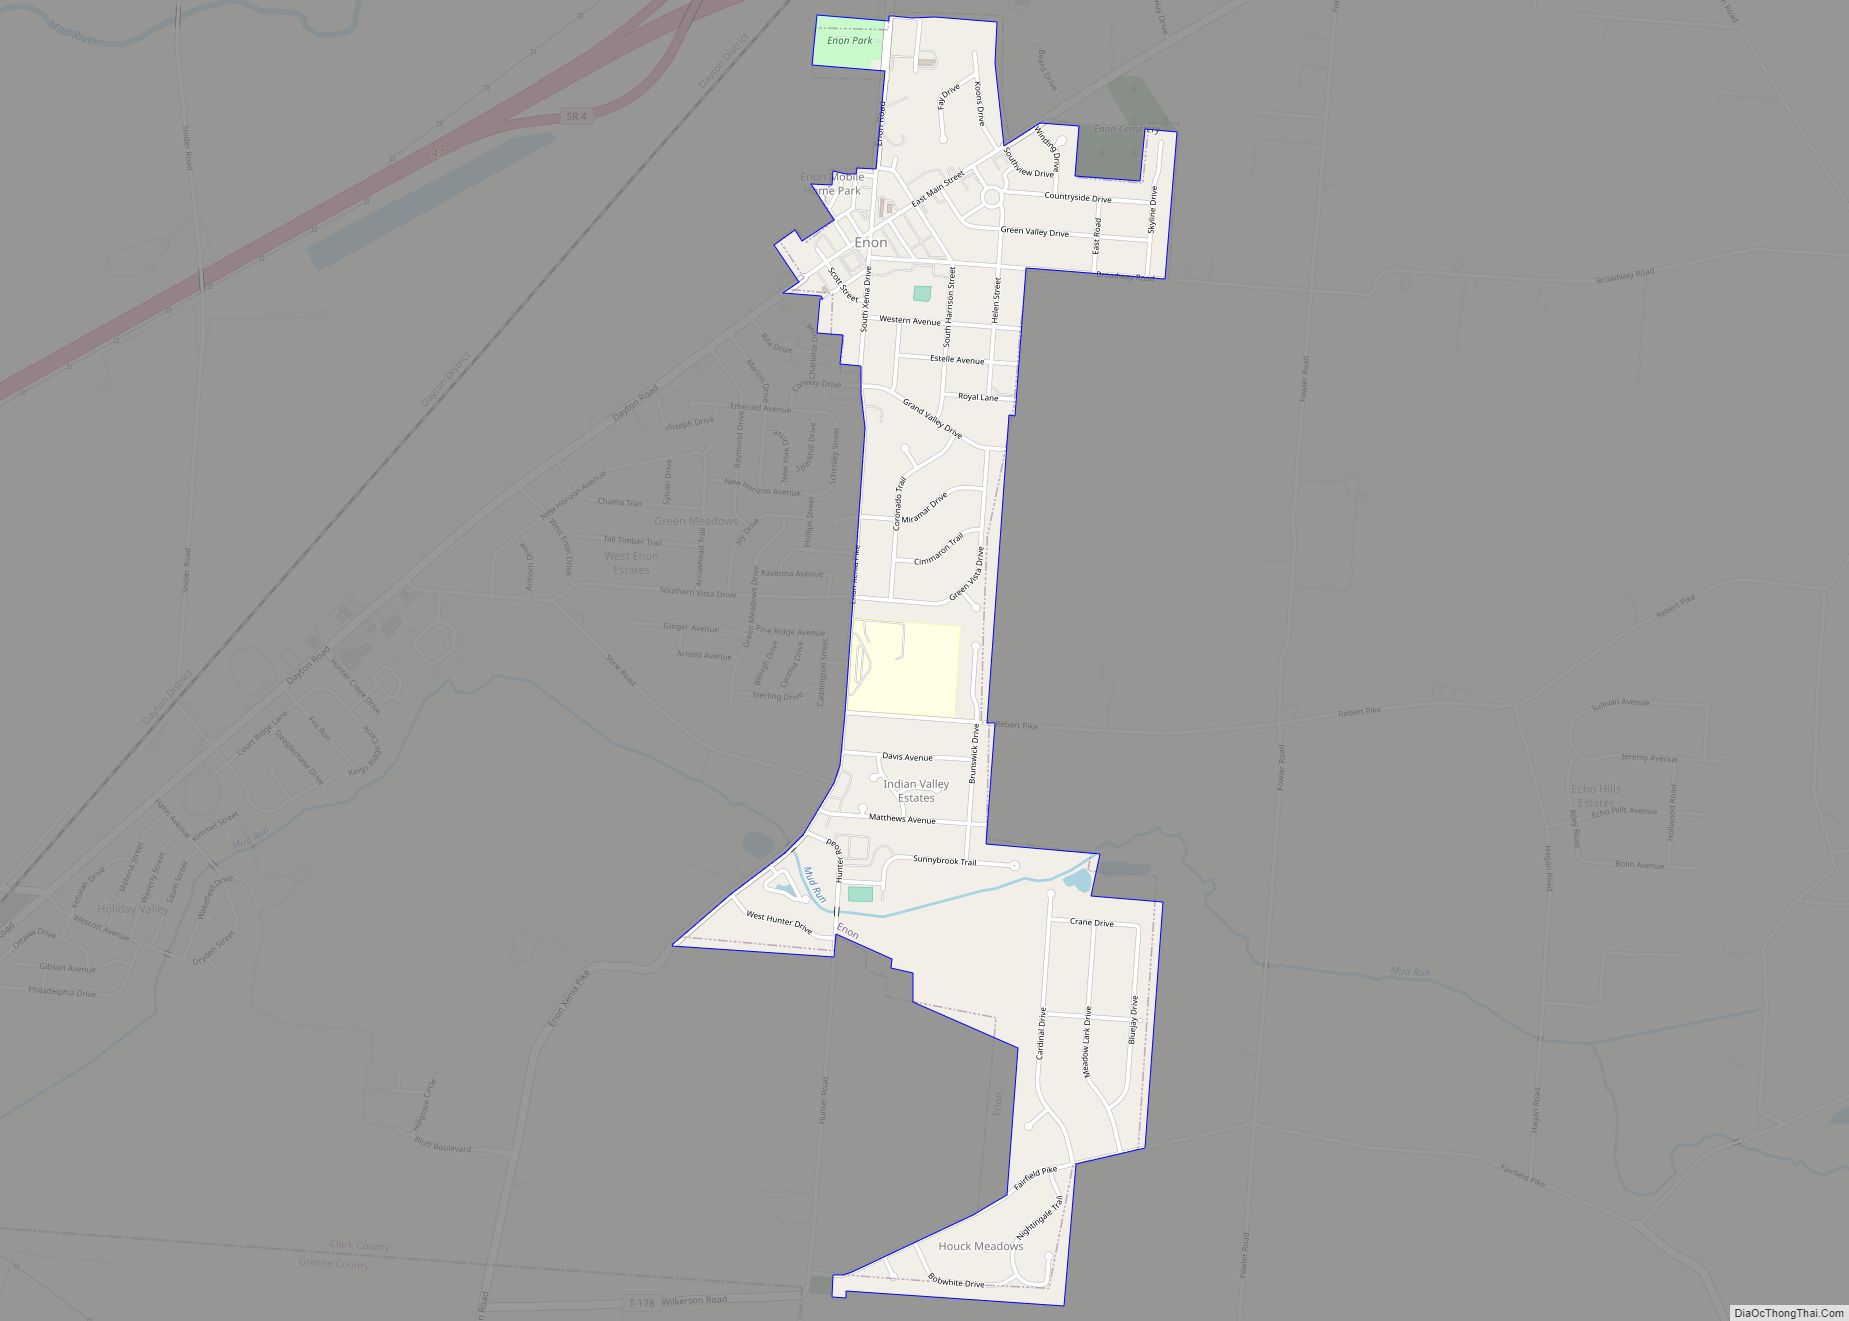 Map of Enon village